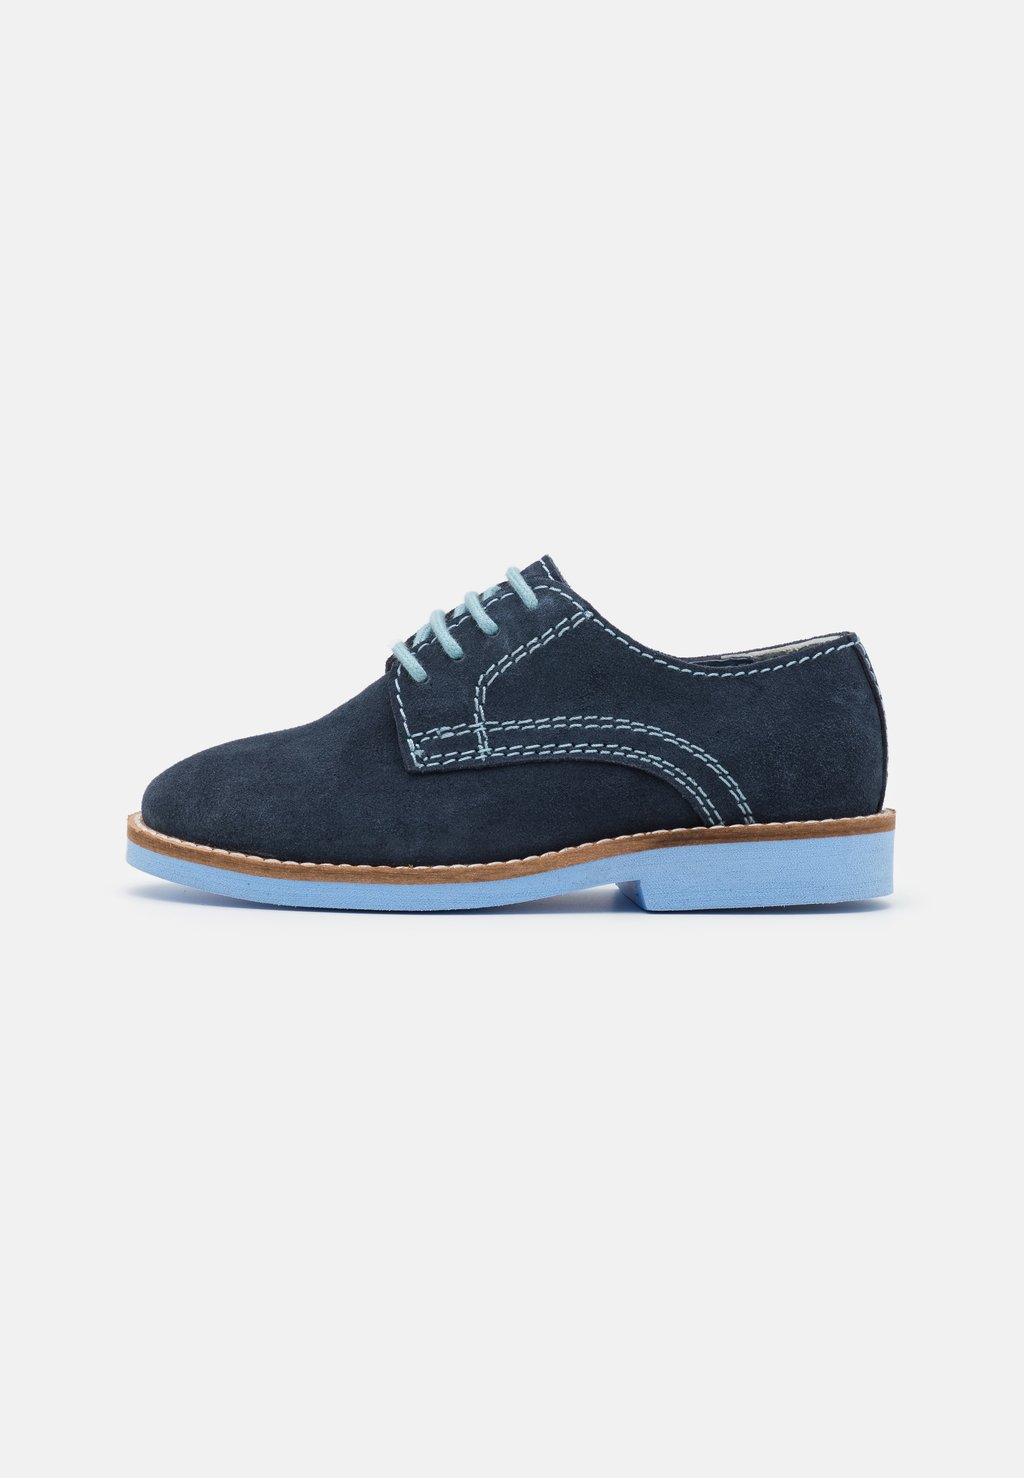 Спортивные туфли на шнуровке LEATHER Friboo, цвет dark blue спортивные туфли на шнуровке simone comfort bugatti цвет dark blue